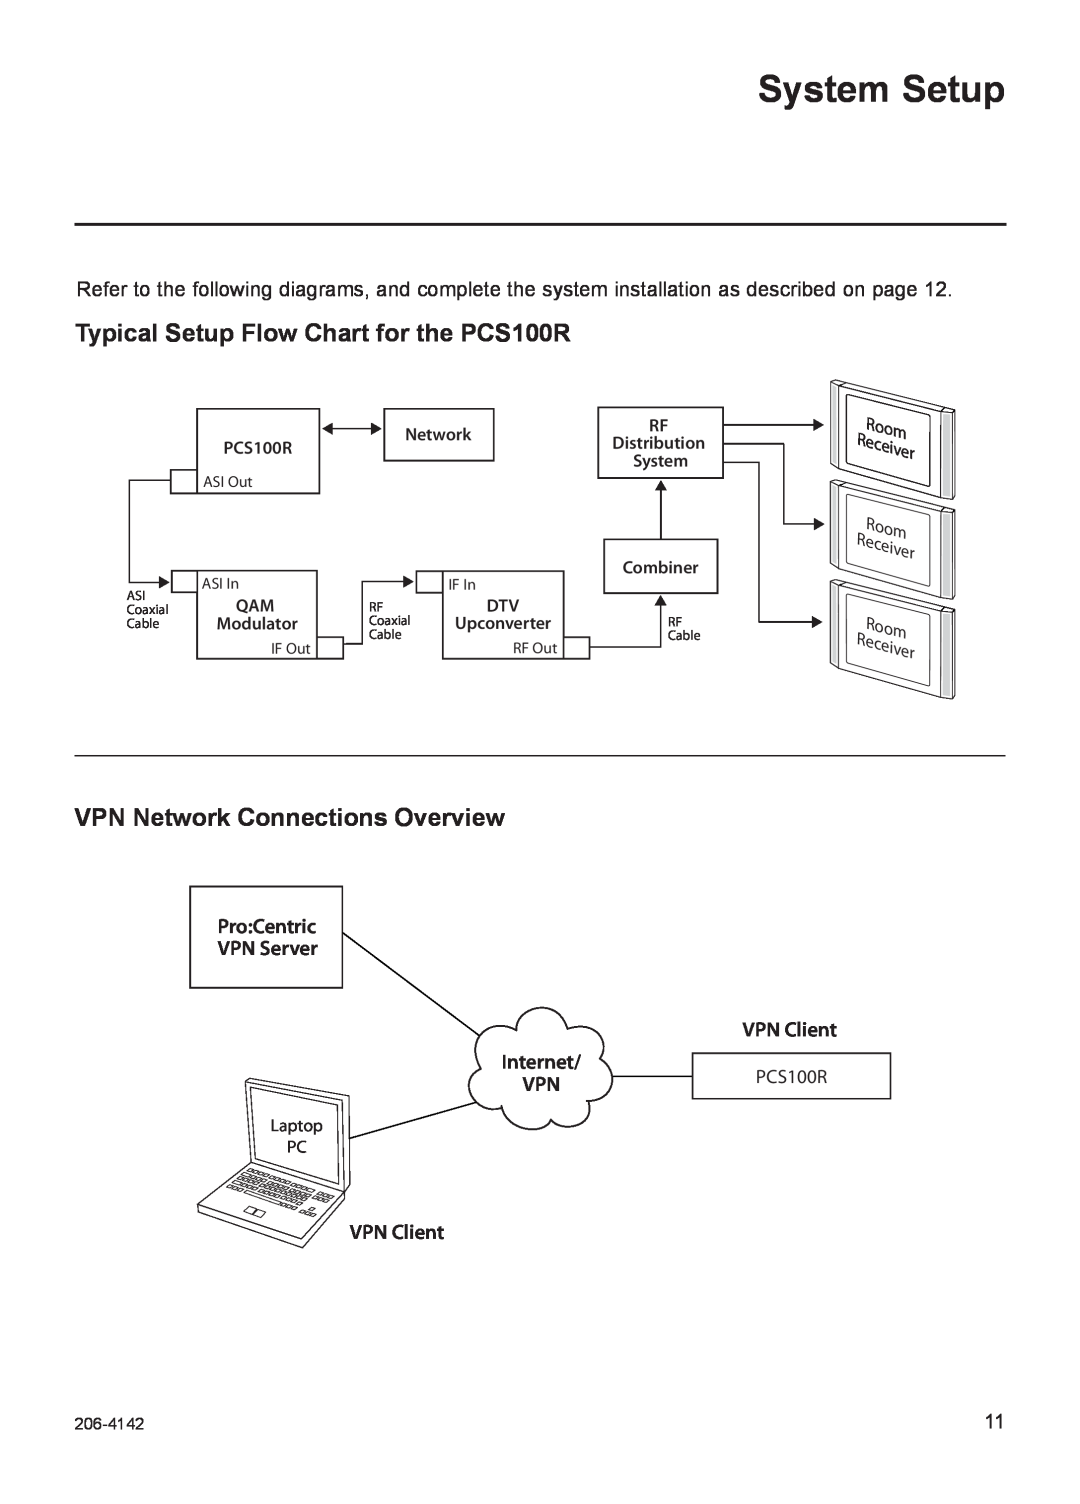 LG Electronics System Setup, Typical Setup Flow Chart for the PCS100R, VPN Network Connections Overview, VPN Client 